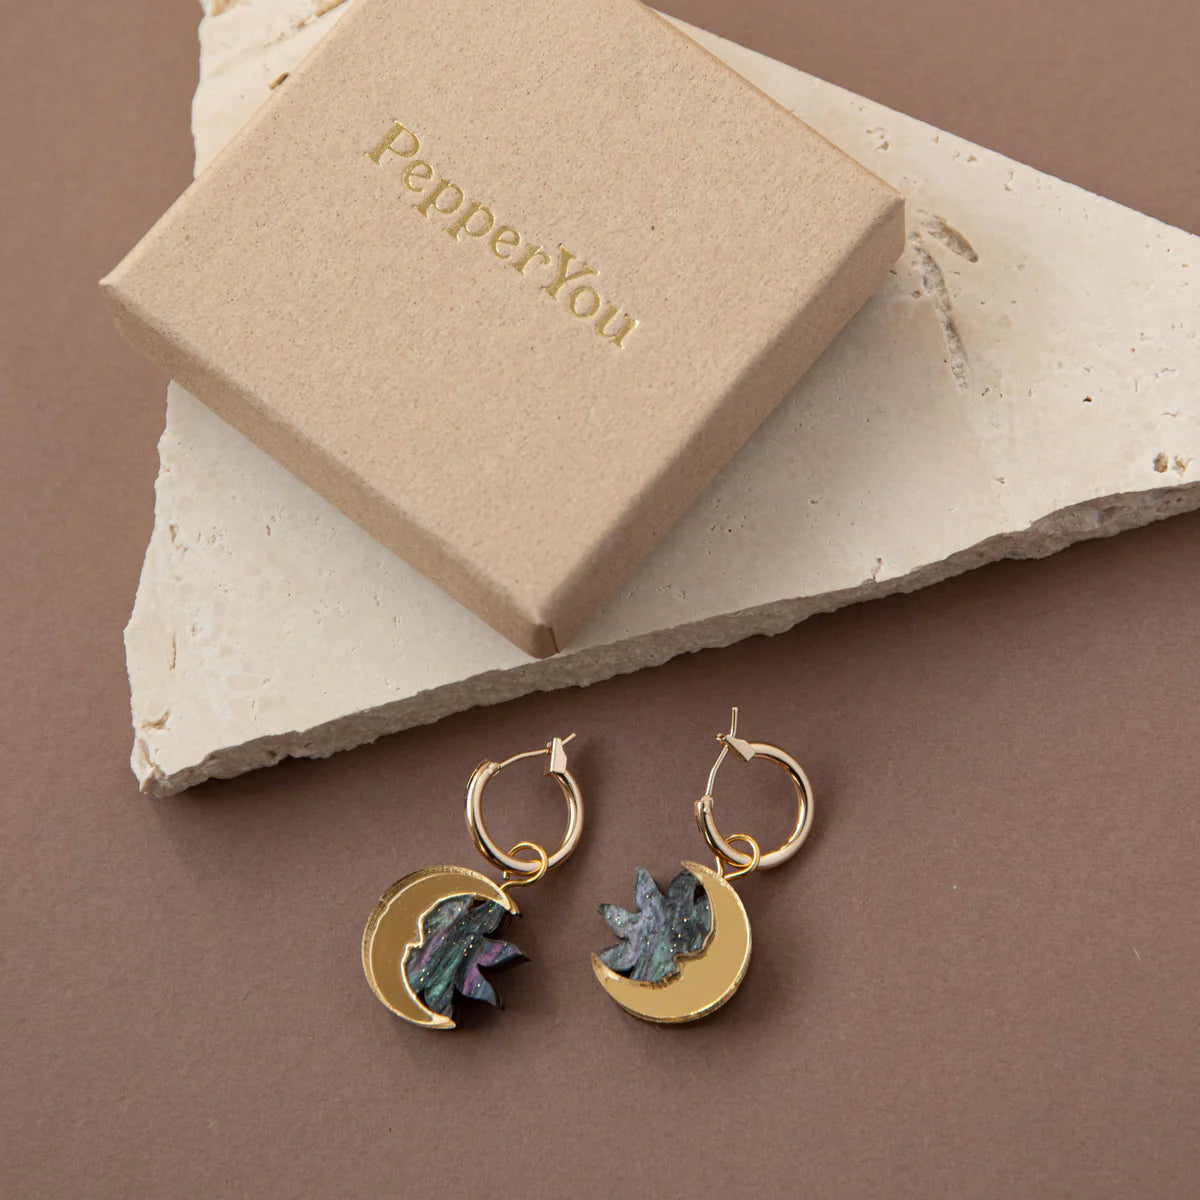 Daydream sun & moon hoop earrings - smoke & gold - The Bristol Artisan Handmade Sustainable Gifts and Homewares.